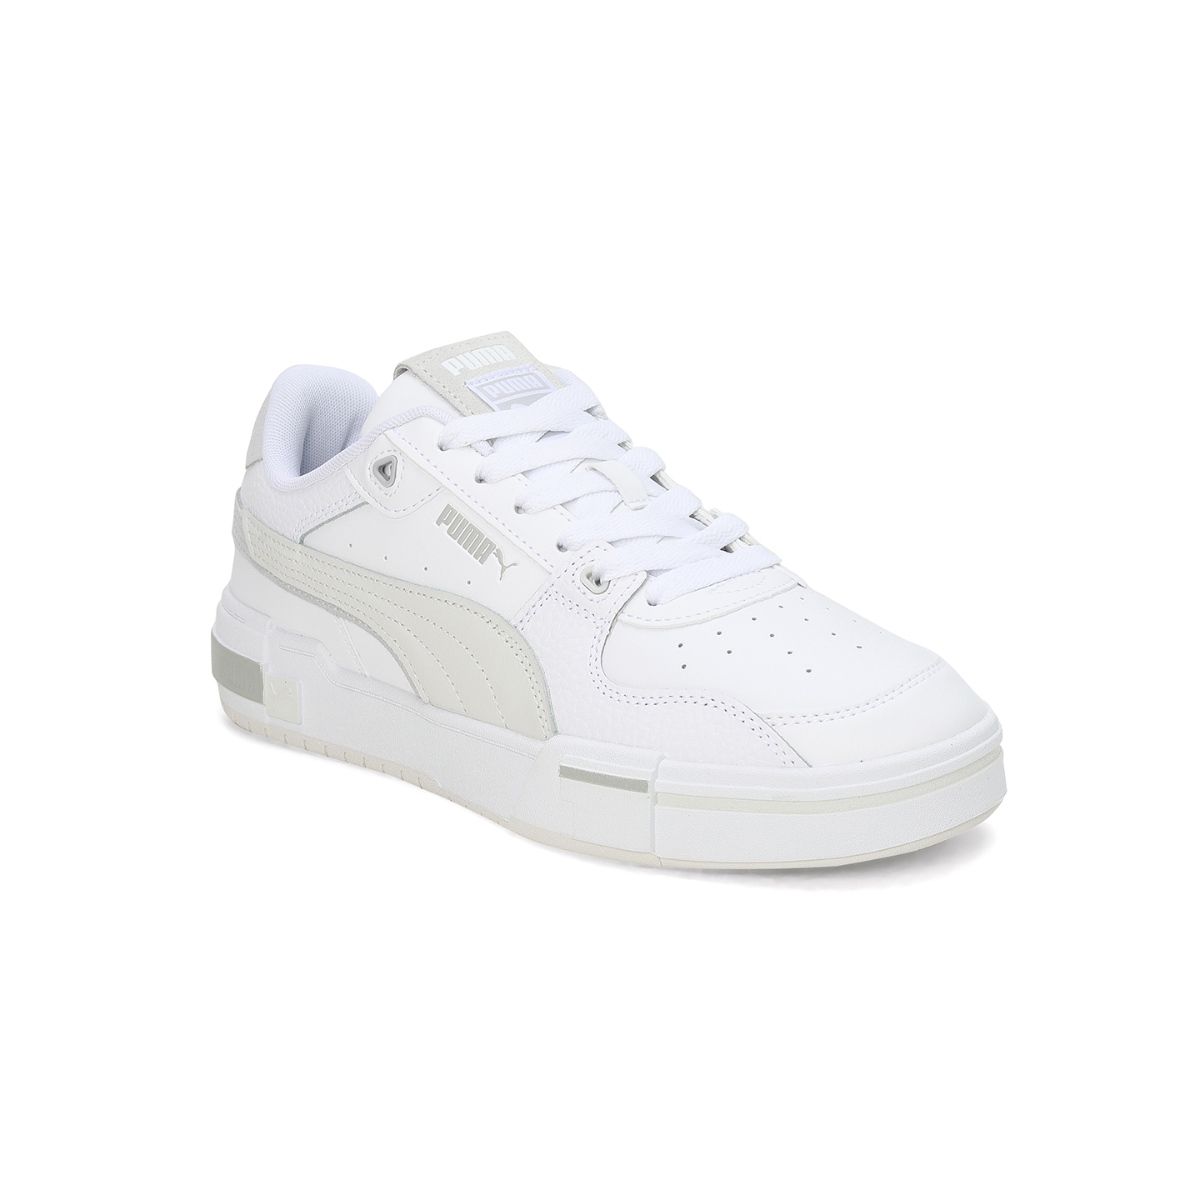 Buy Puma Ca Pro Glitch Unisex White Sneakers Online